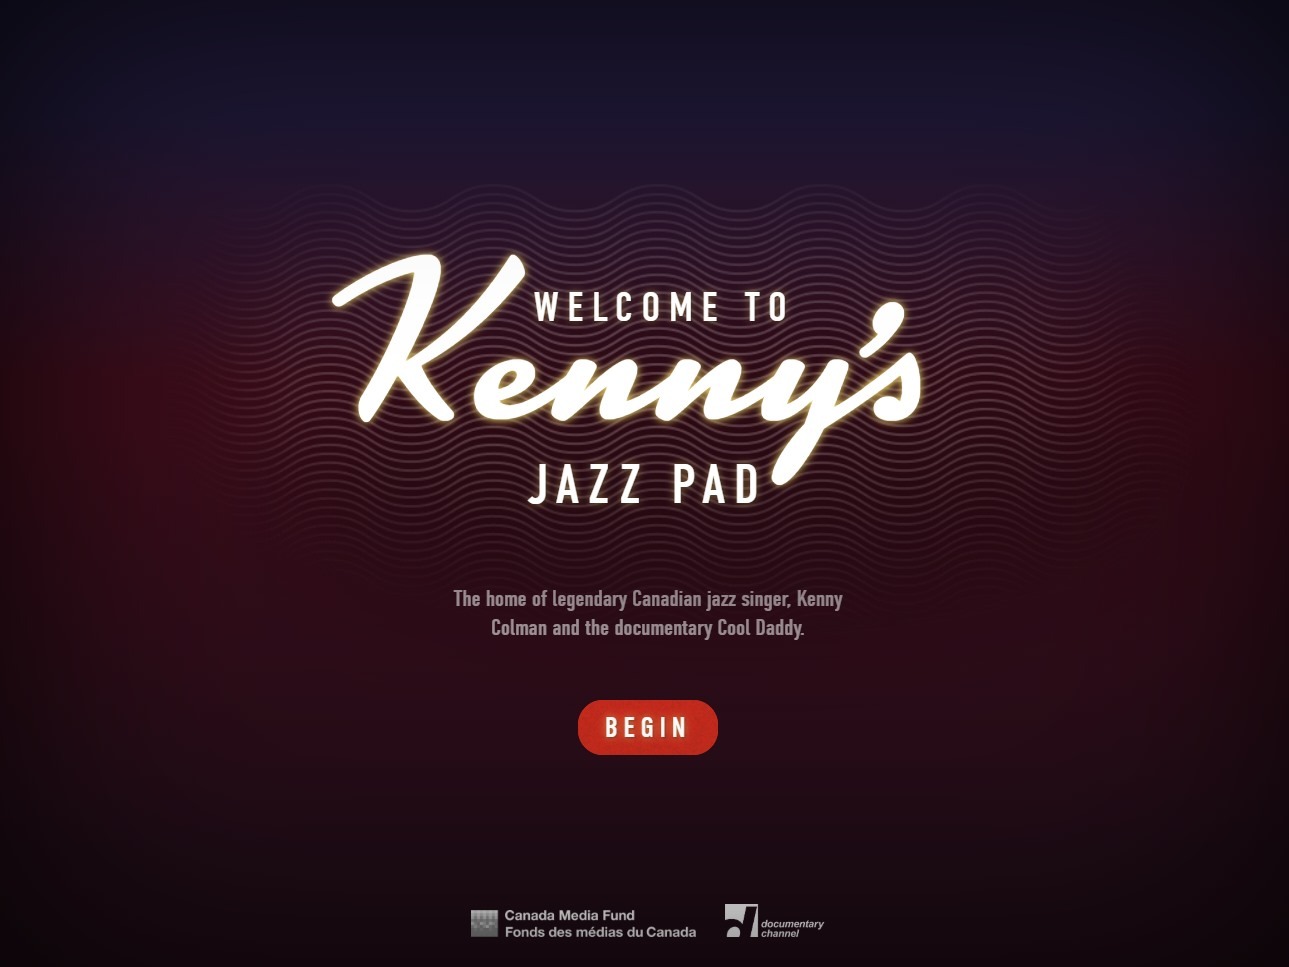 Kenny's Jazz Pad